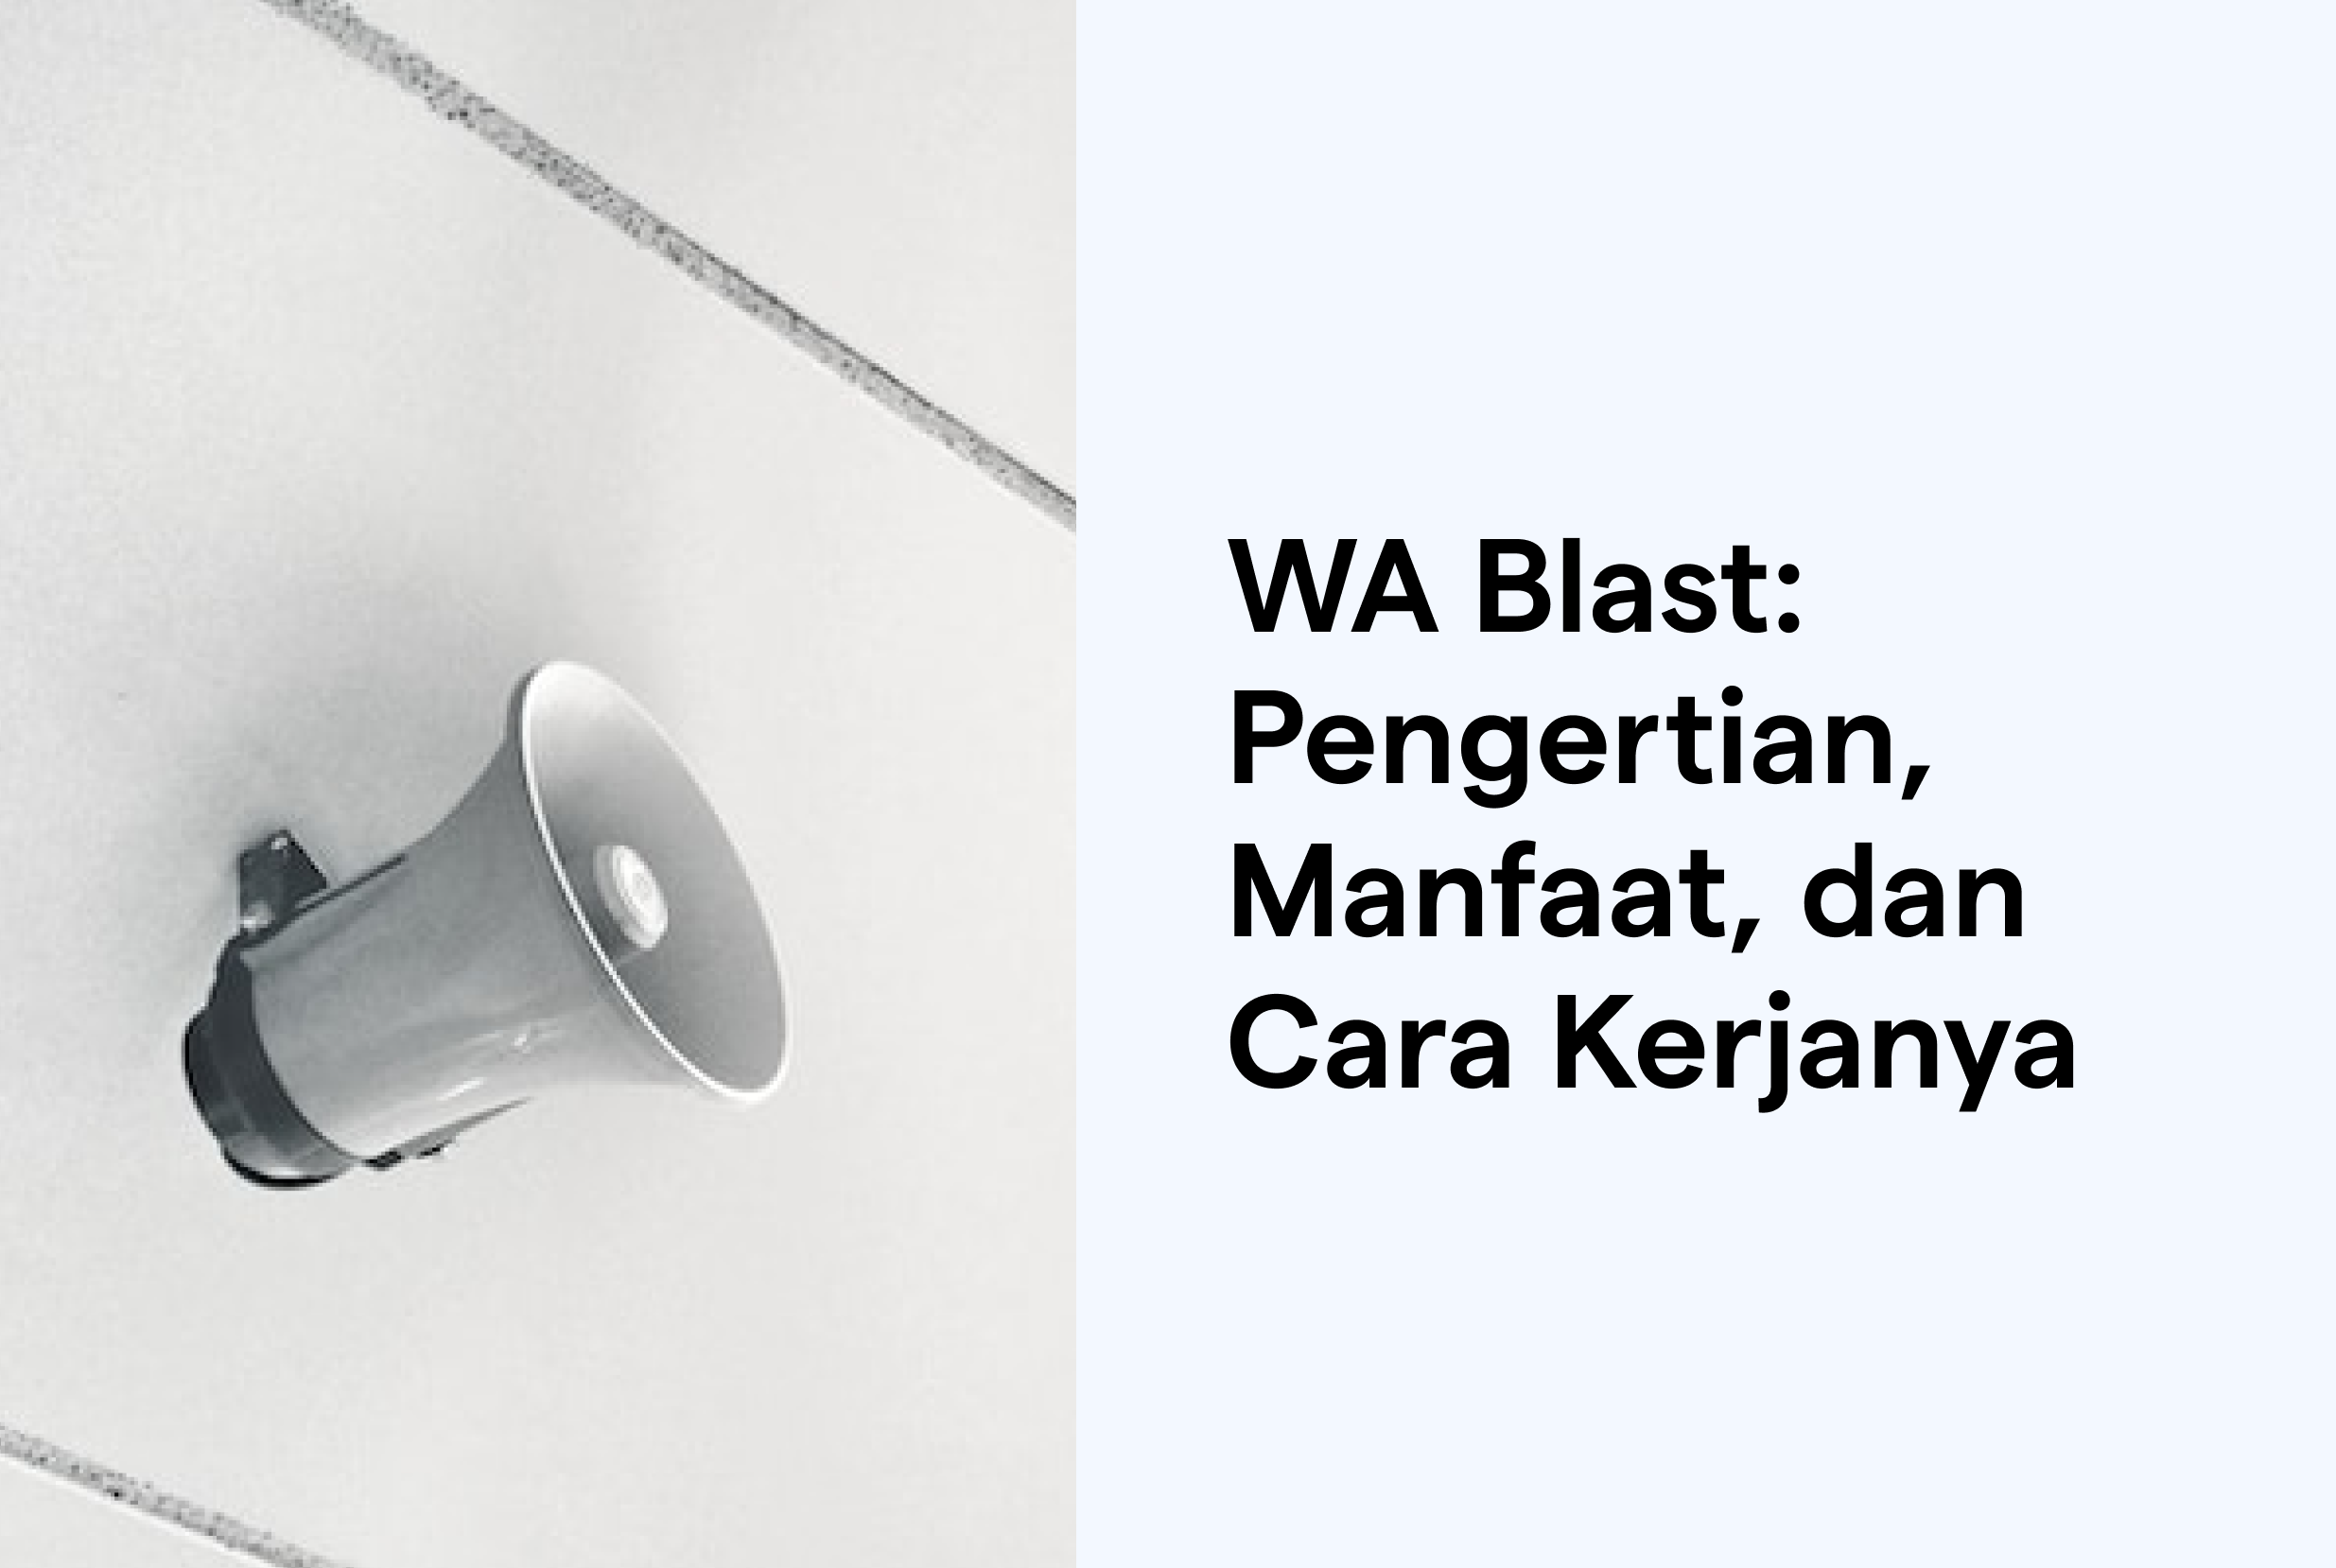 WA Blast: Pengertian, Manfaat, dan Cara Kerjanya